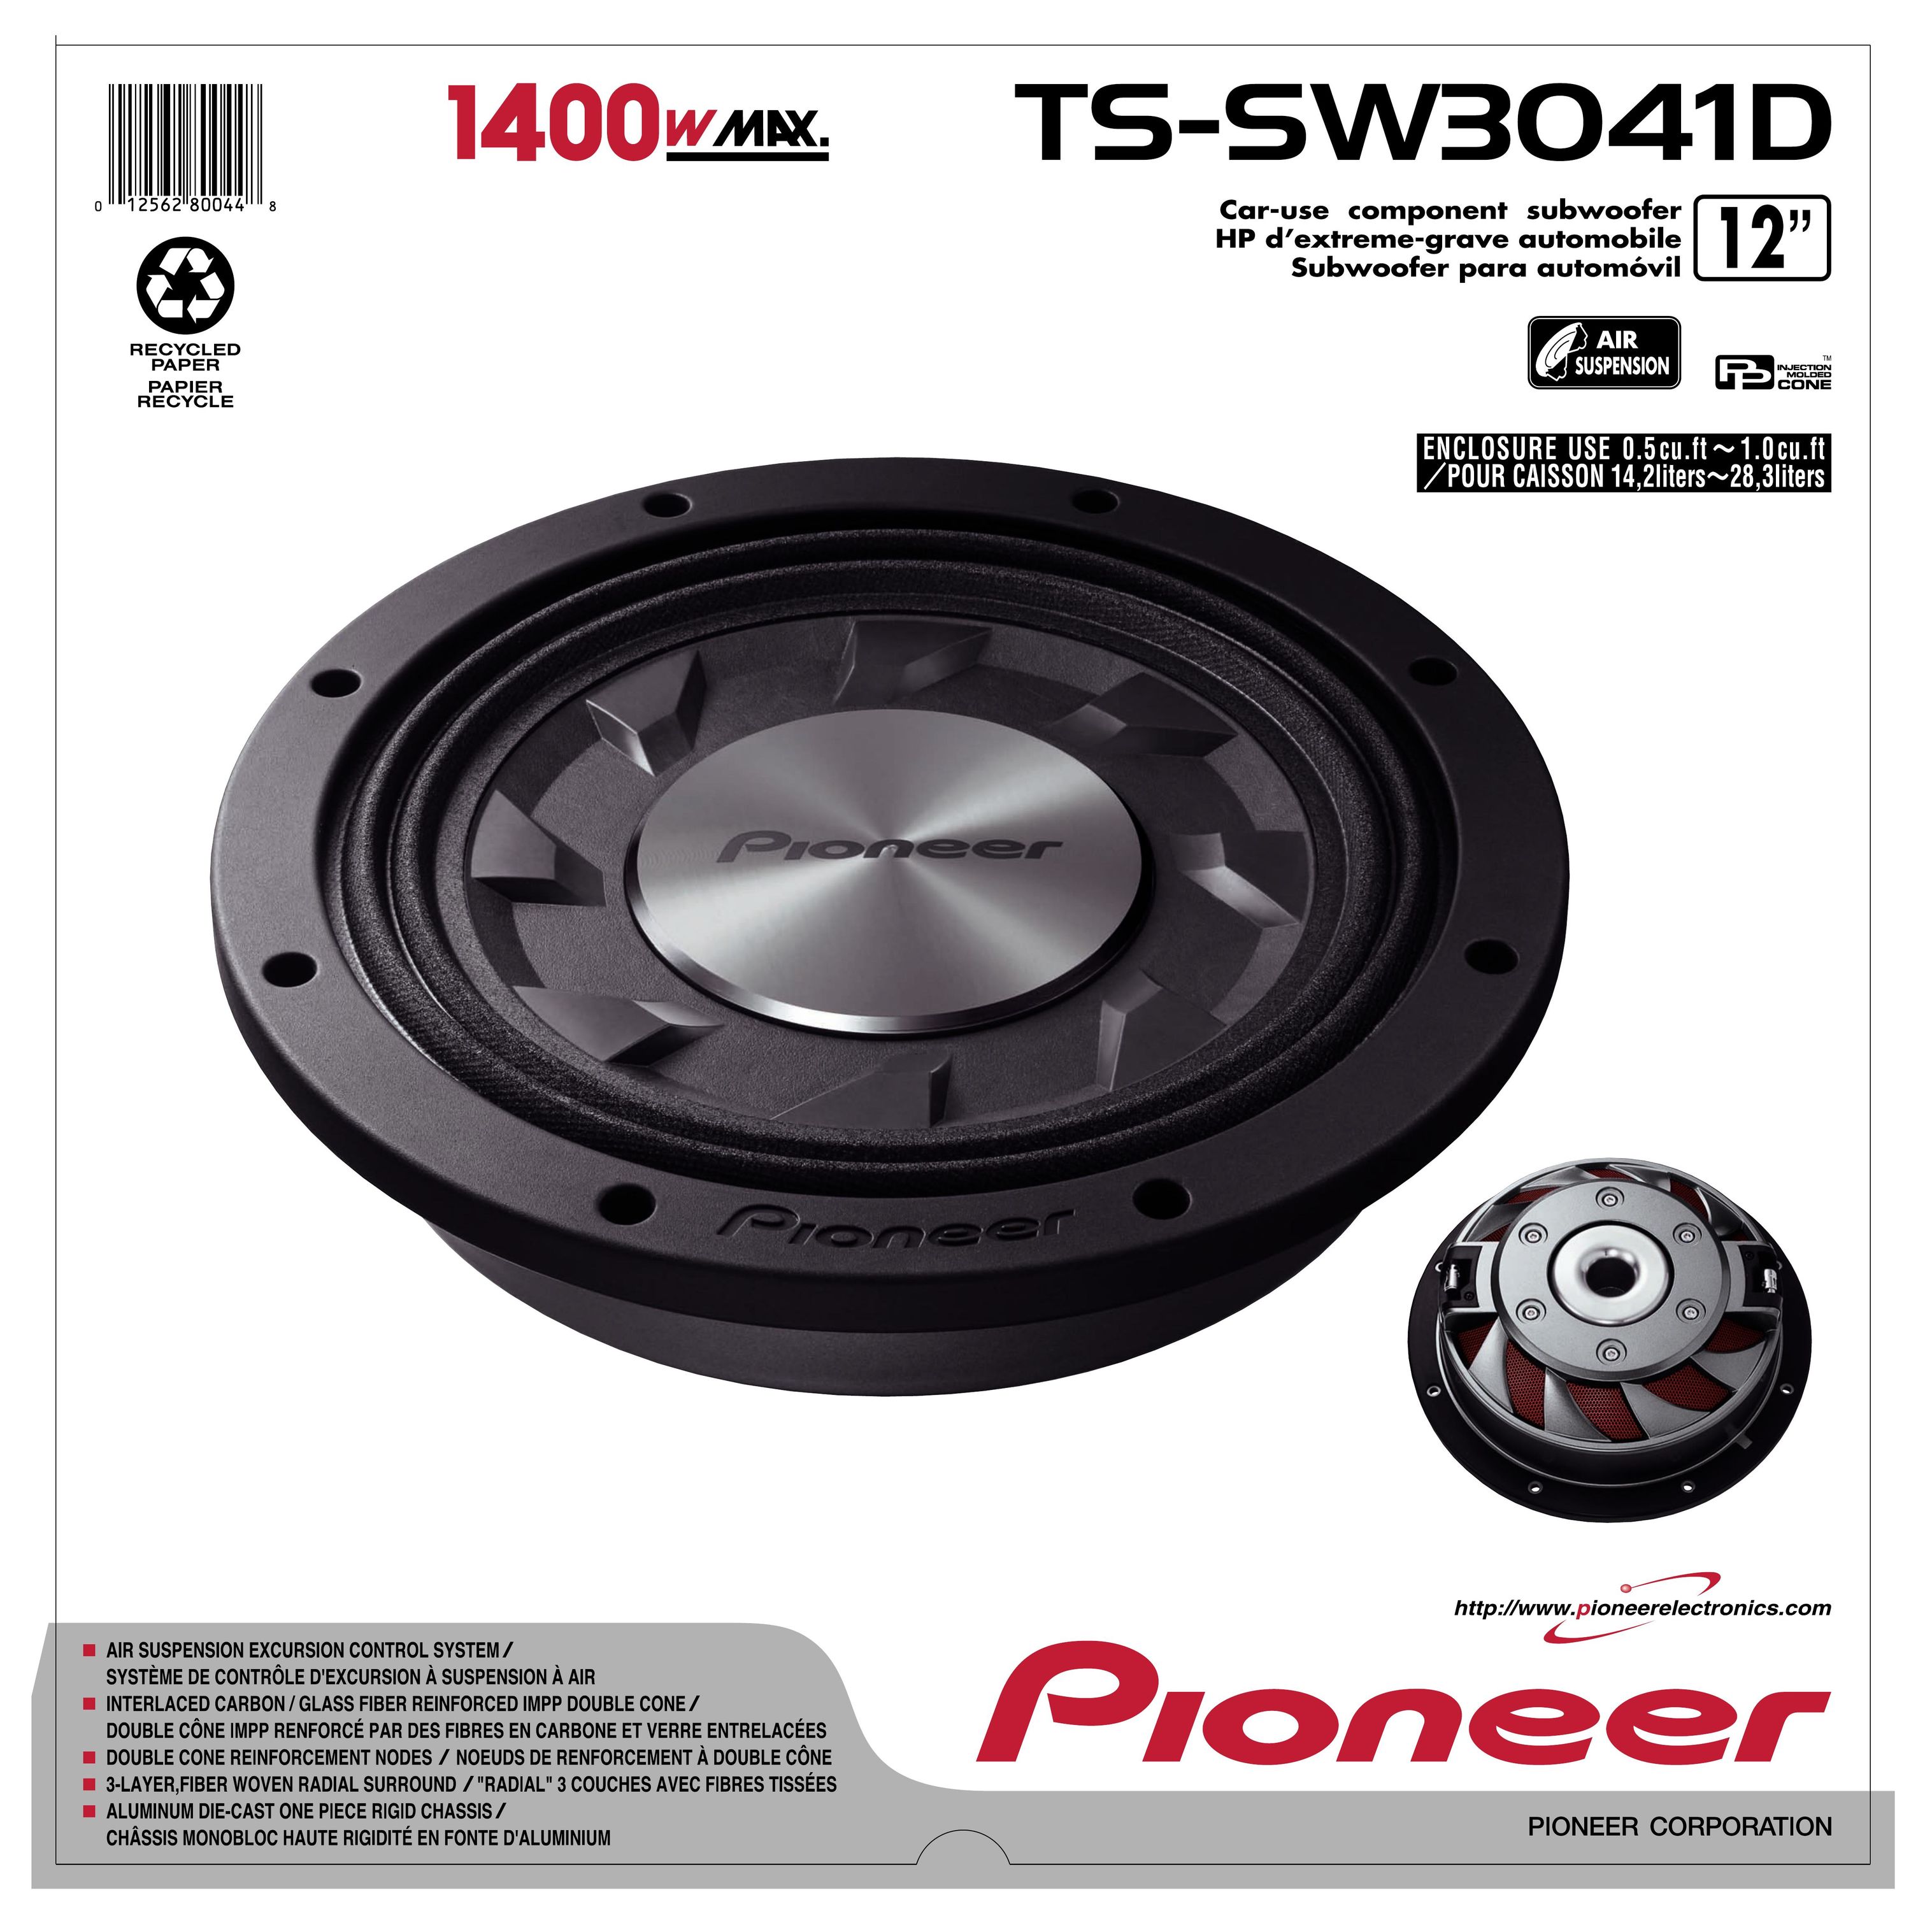 Pioneer TS-SW3041D Car Speaker User Manual